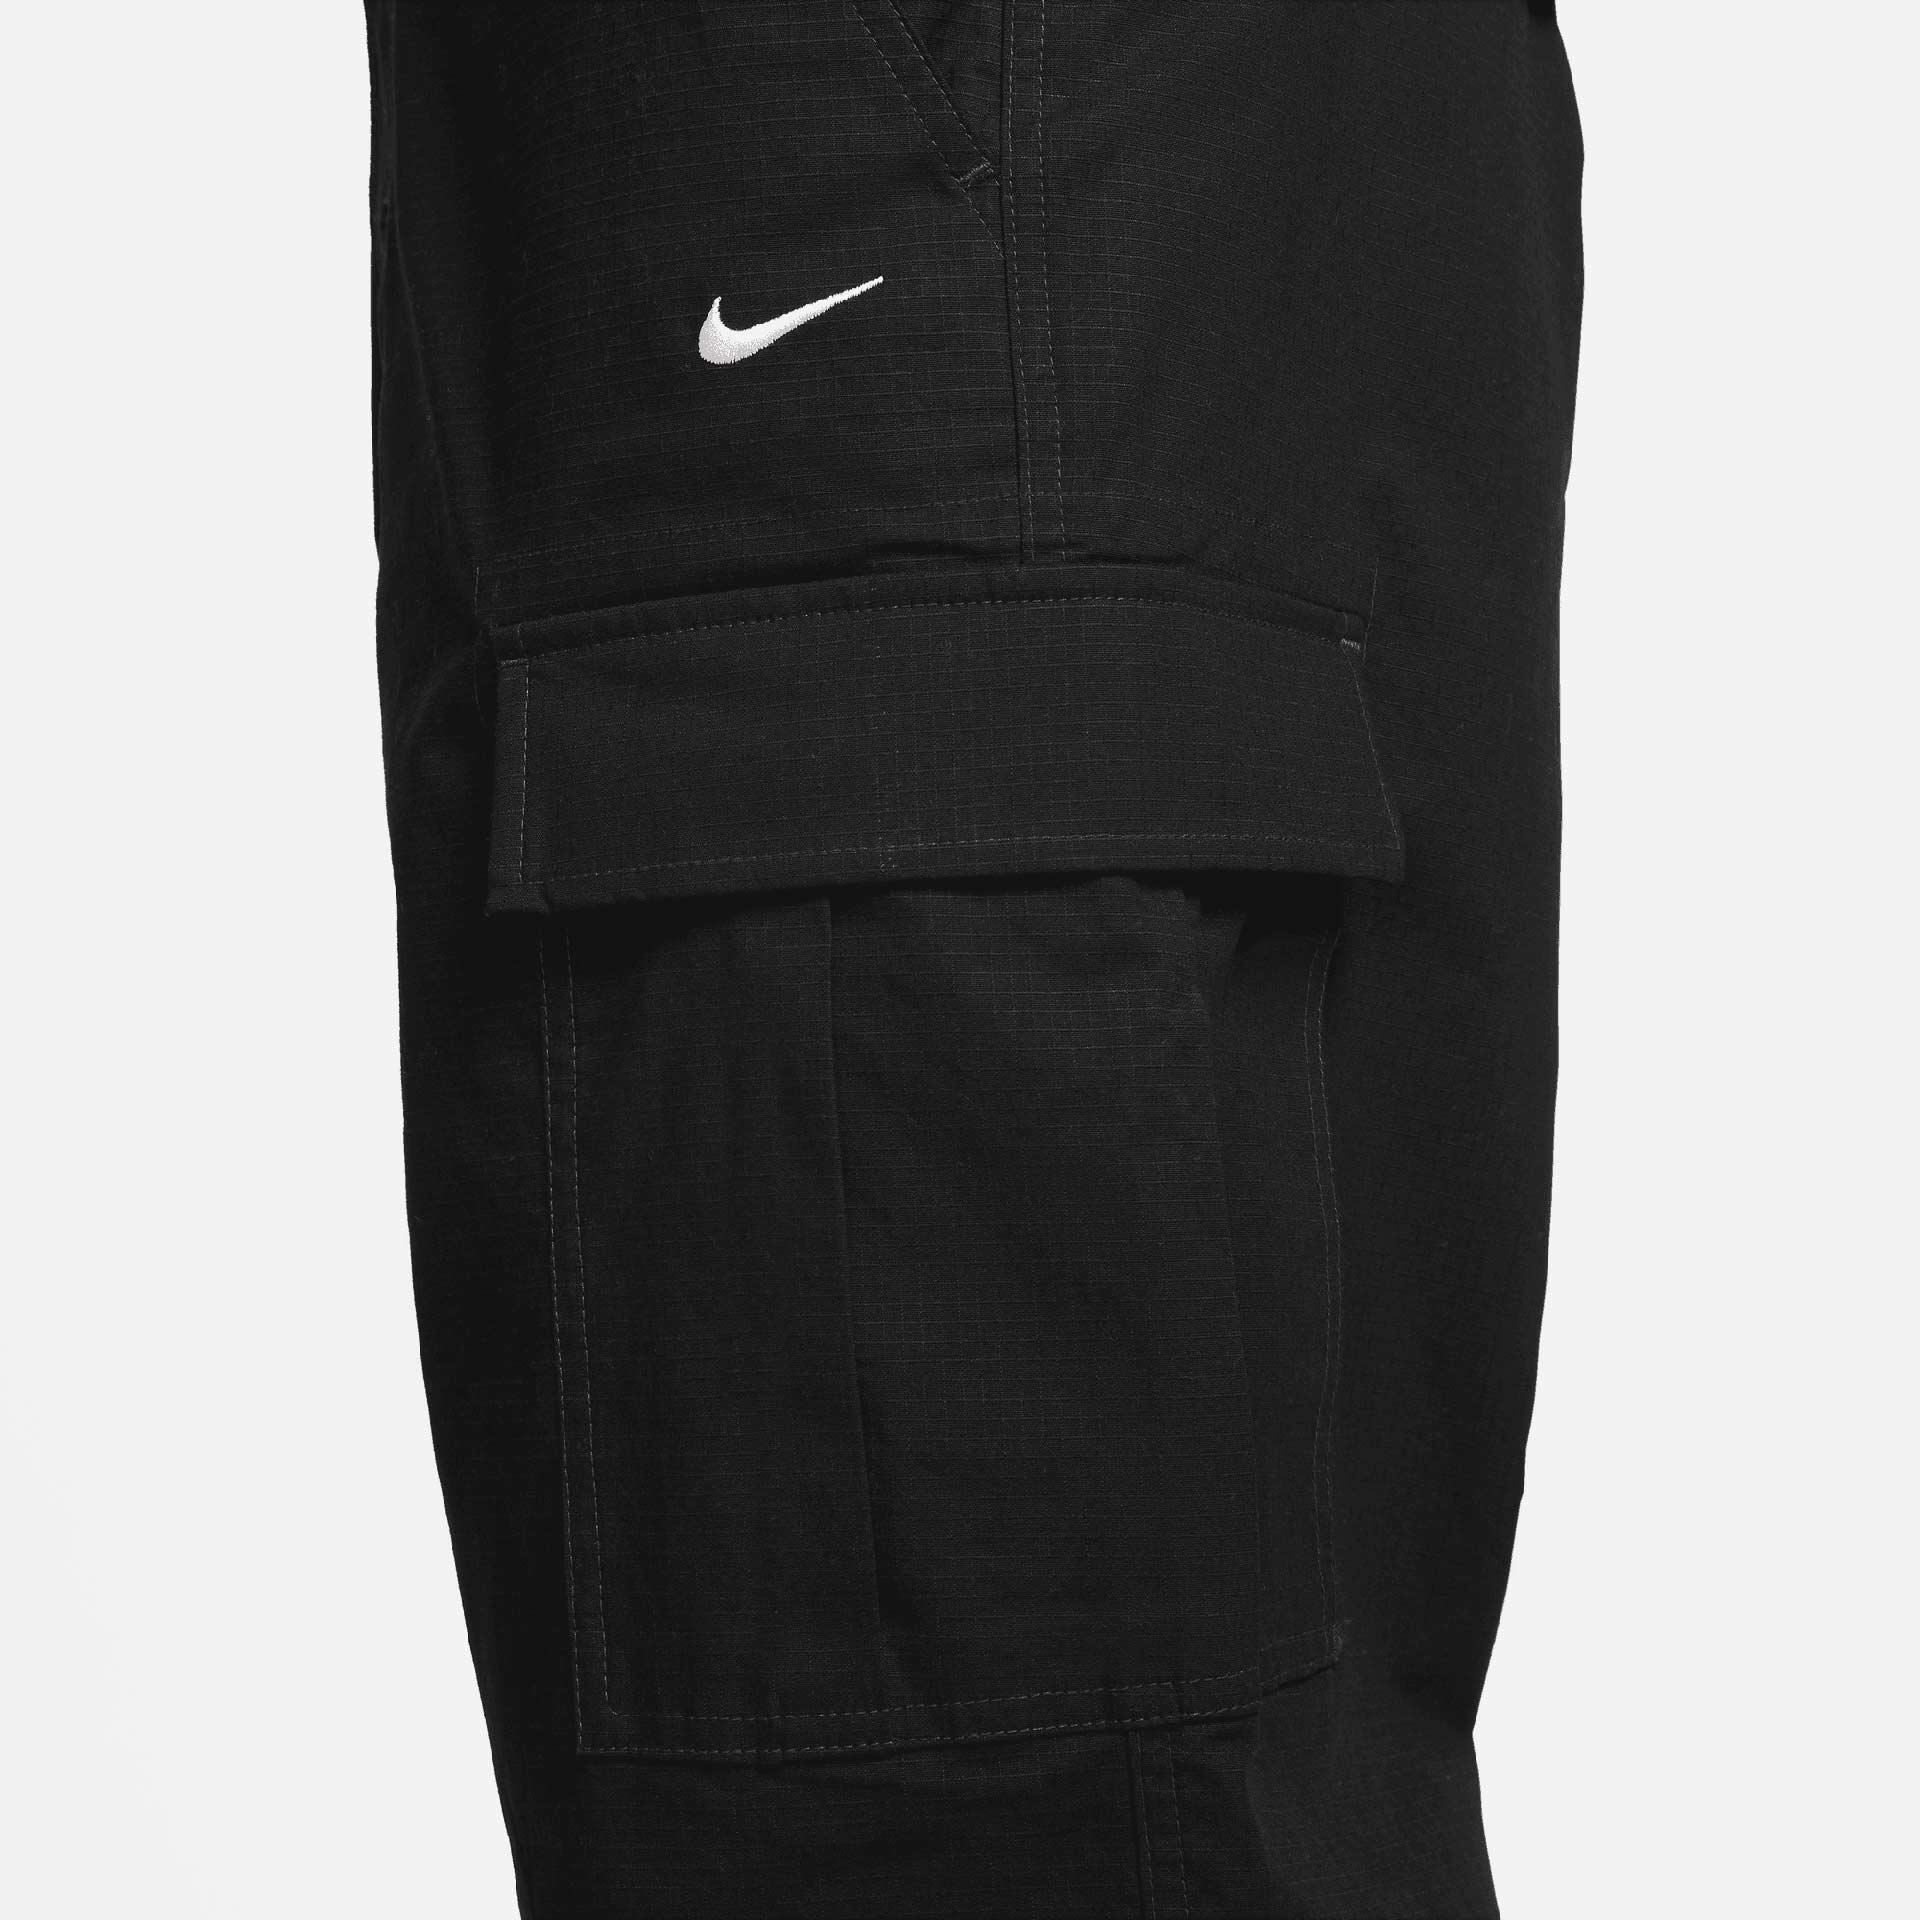 Nike SB Kearny Skate Cargo Pants Black 03